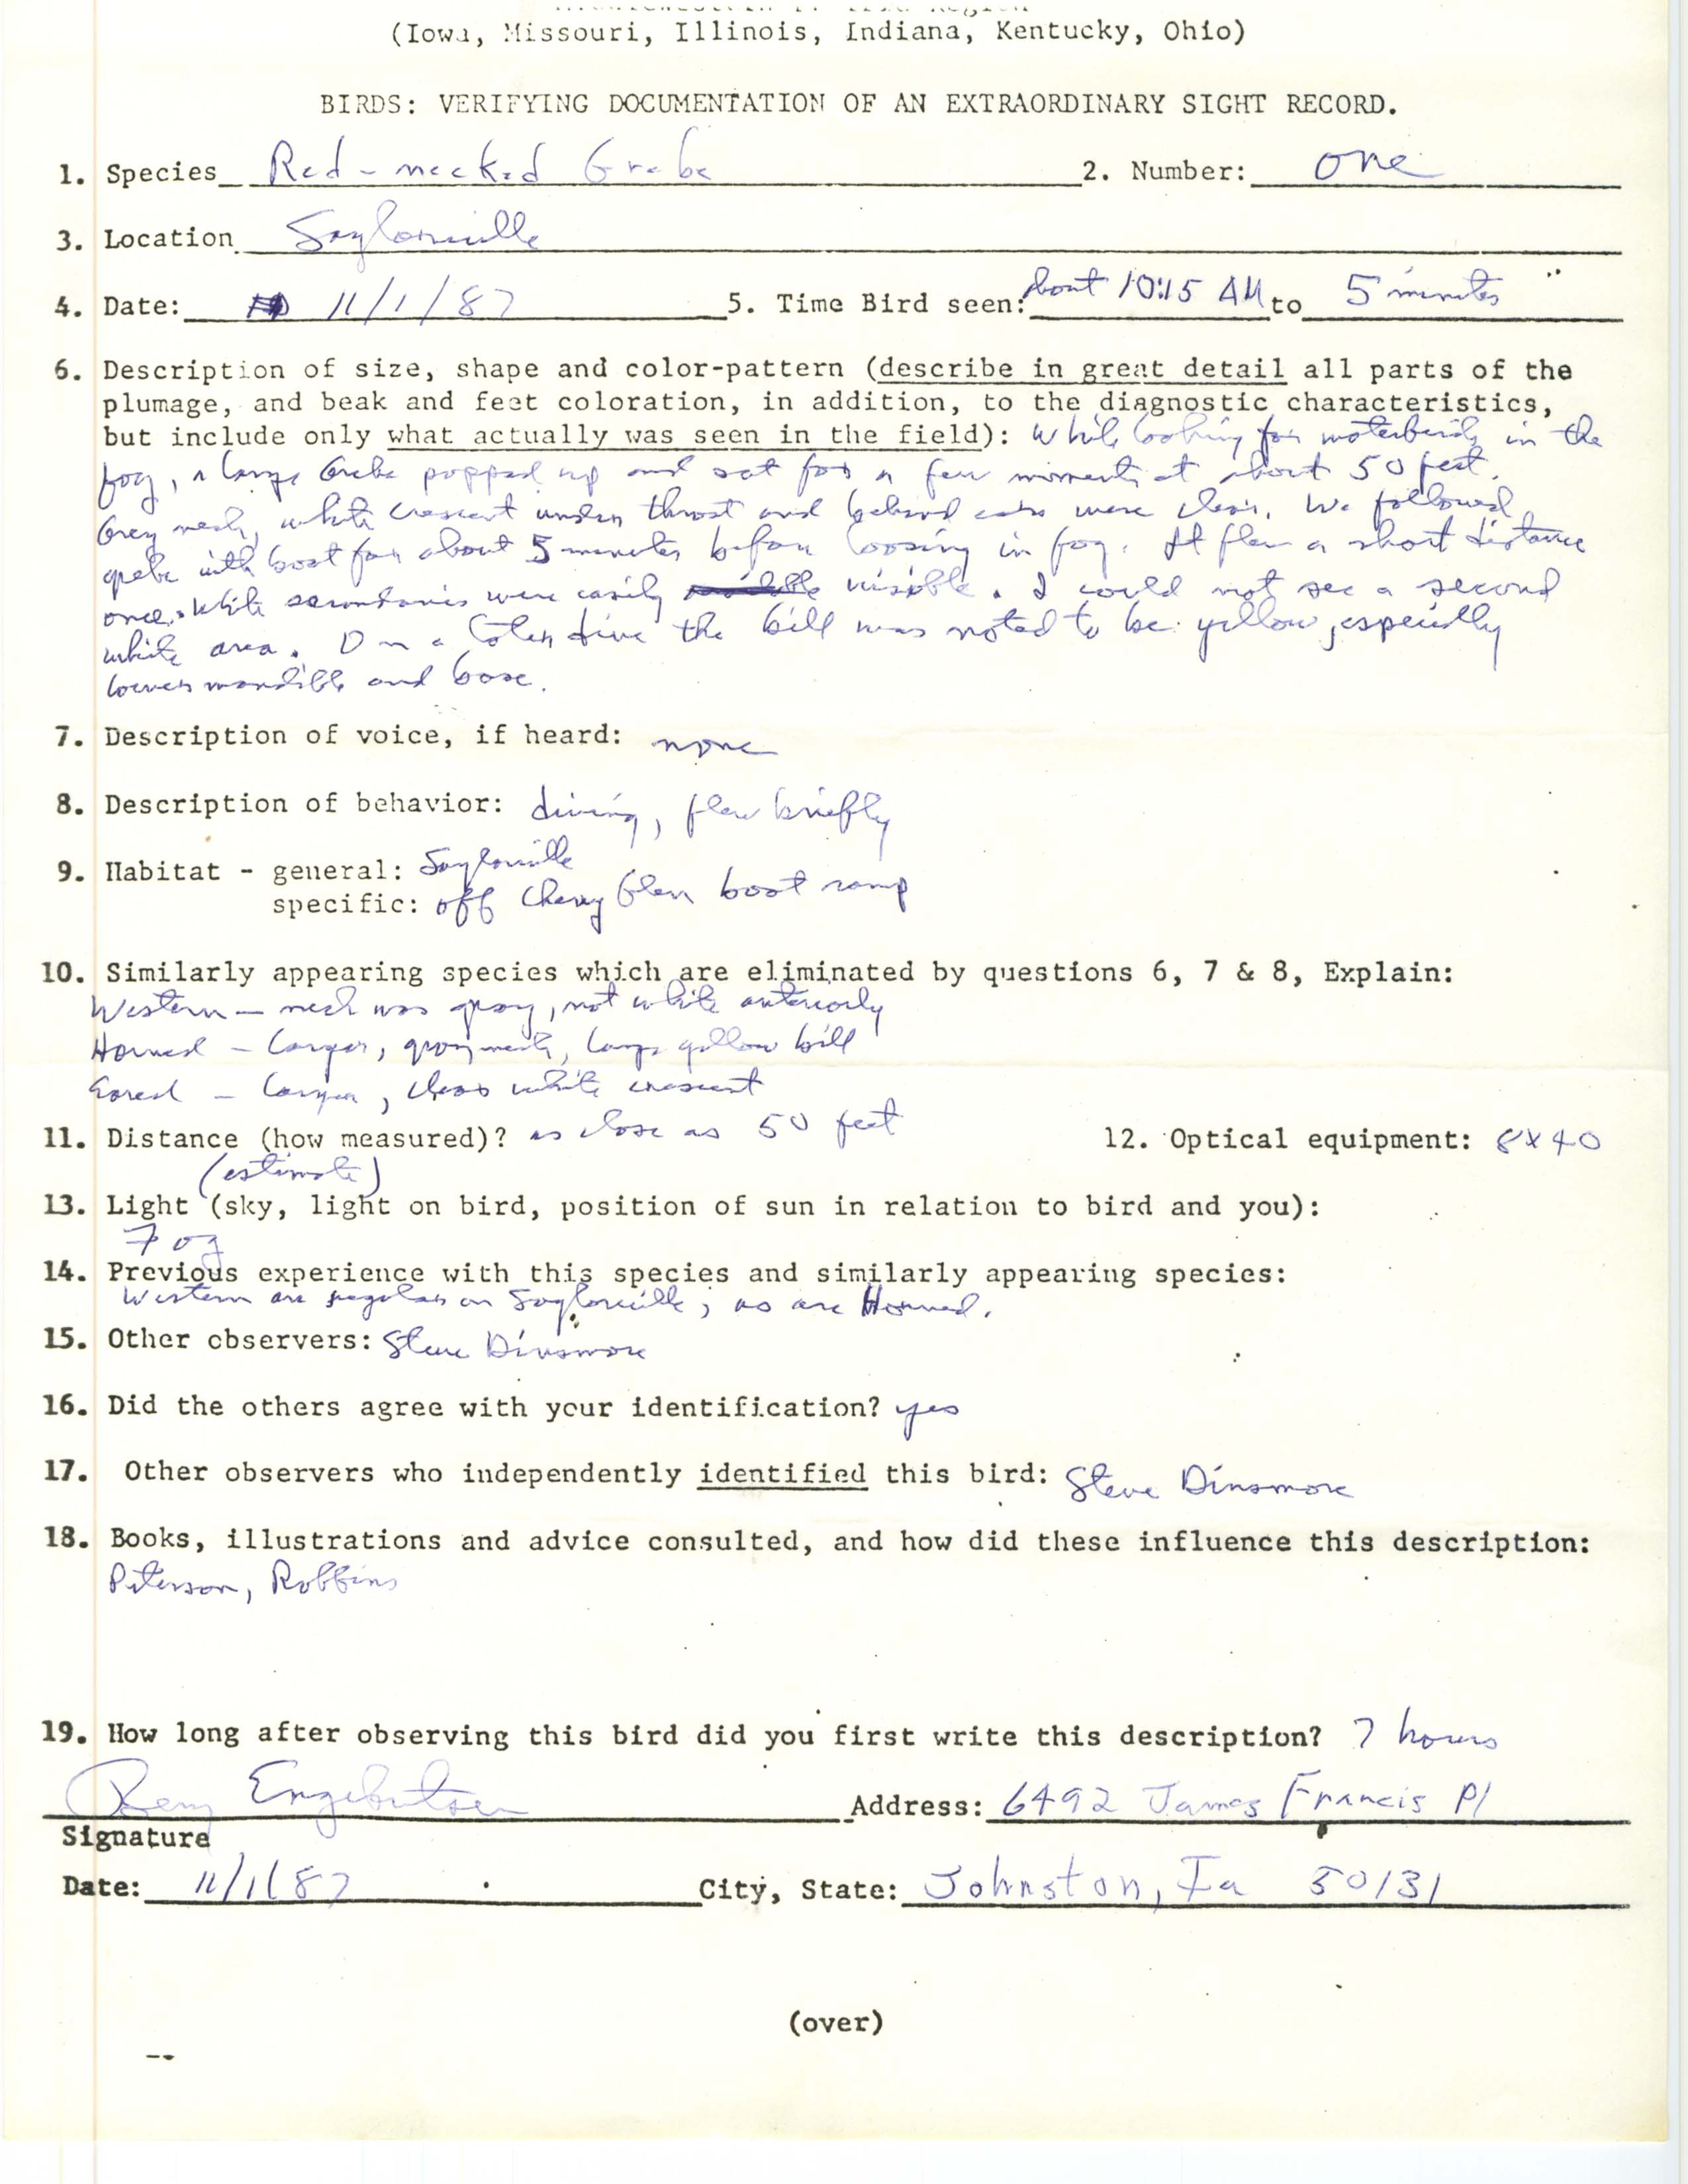 Birds: verifying documentation of an extraordinary sight record for Red-Necked Grebe, November 1, 1987